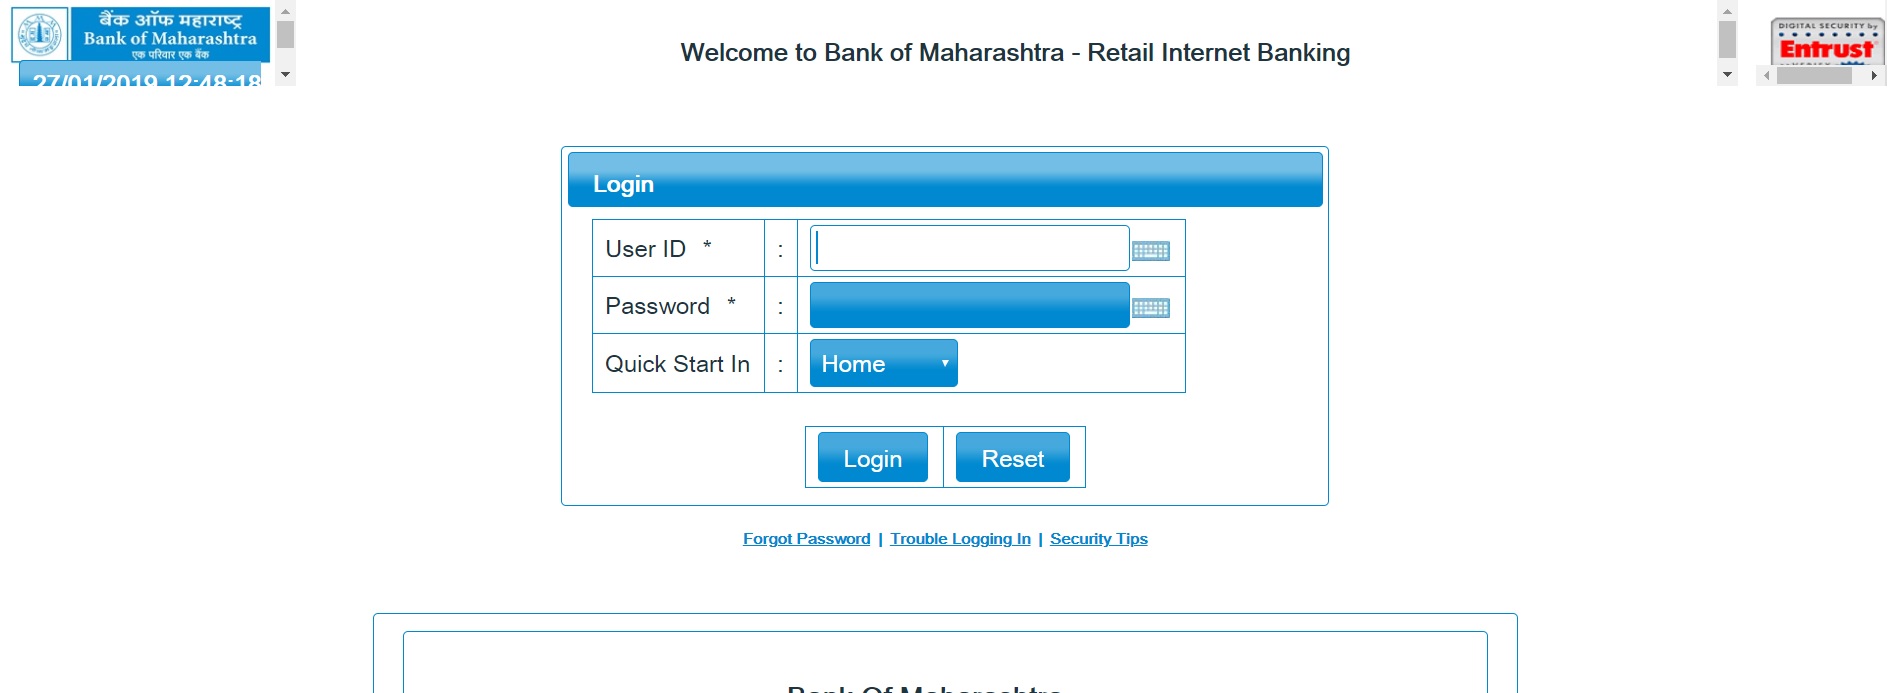 Bank of Maharashtra Online Banking Login